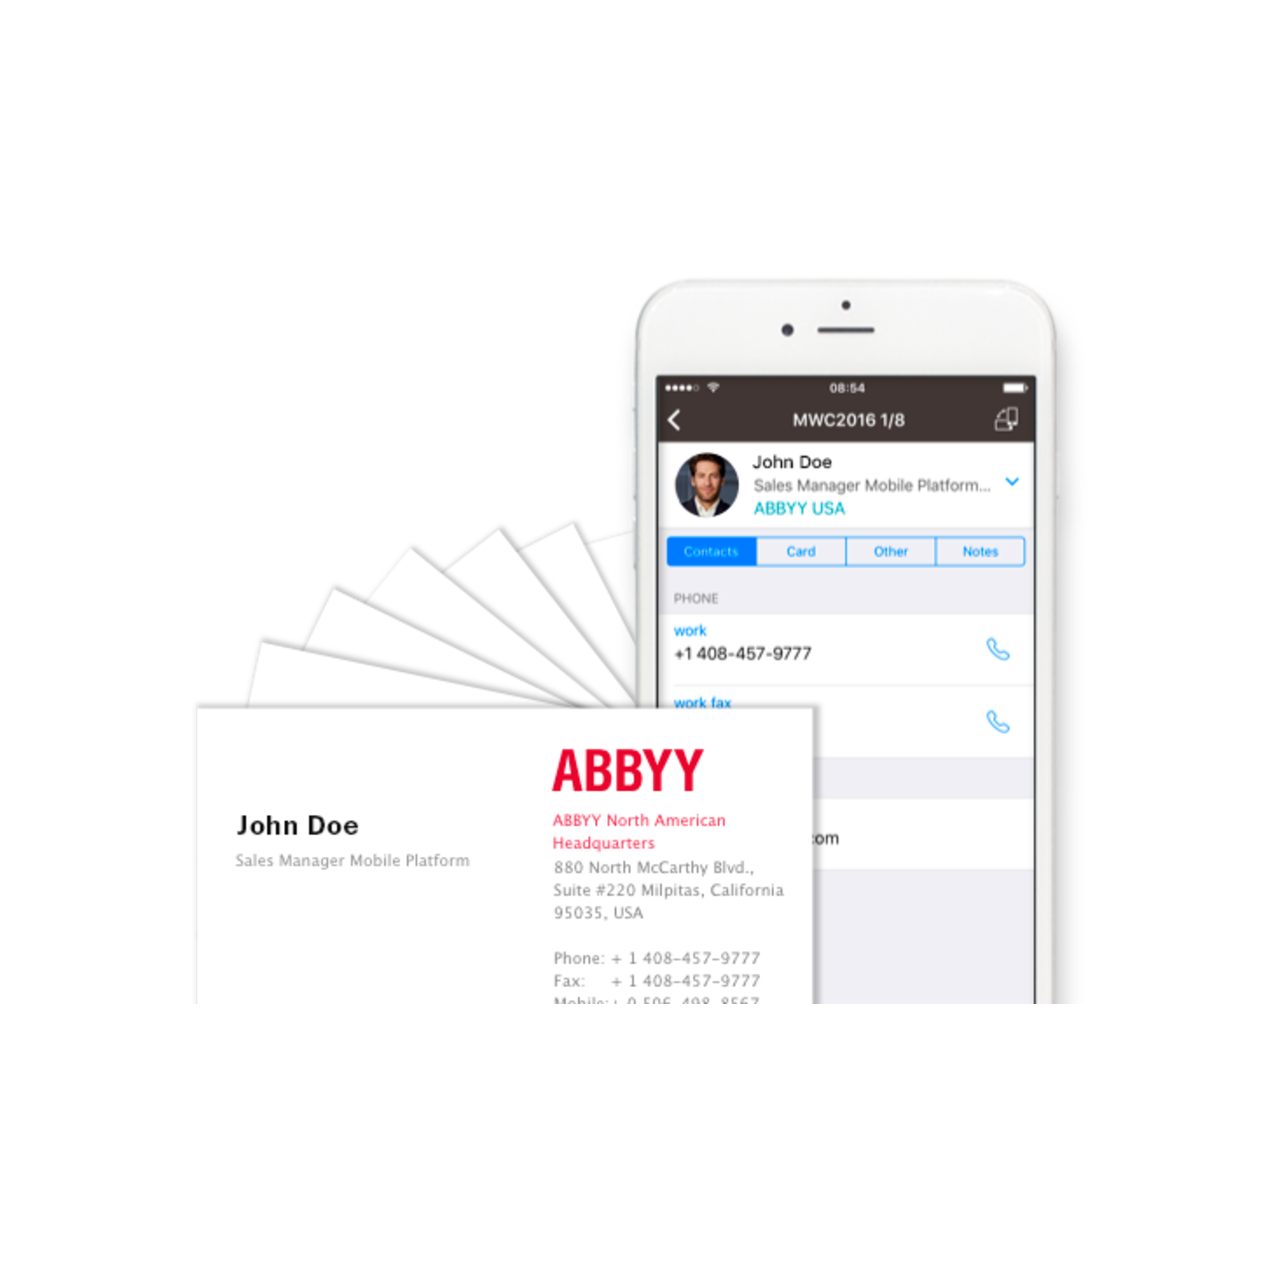 abbyy business card reader free vs pro